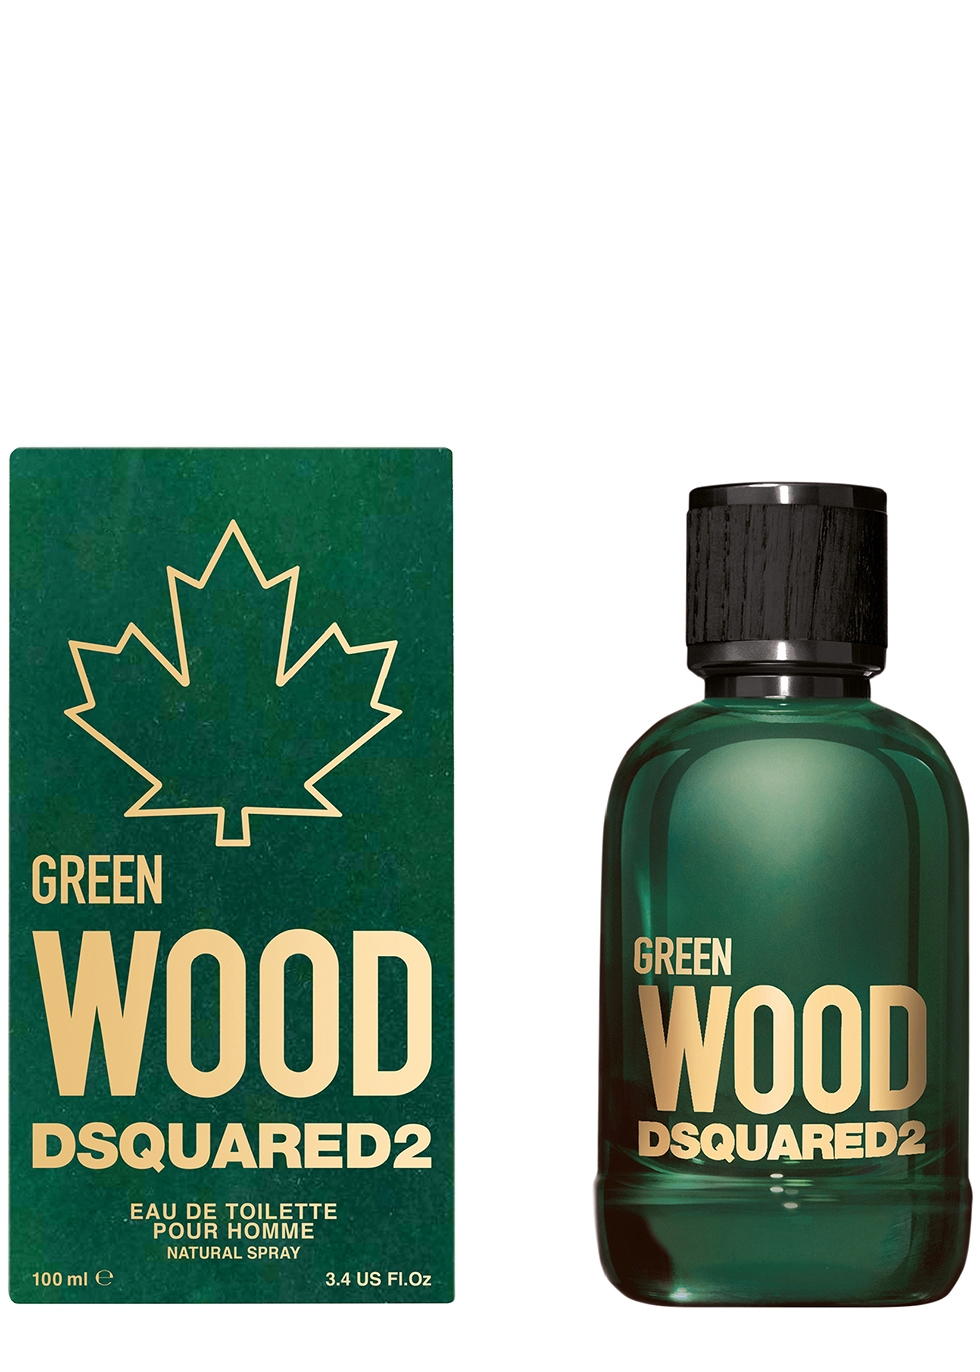 wood parfum dsquared